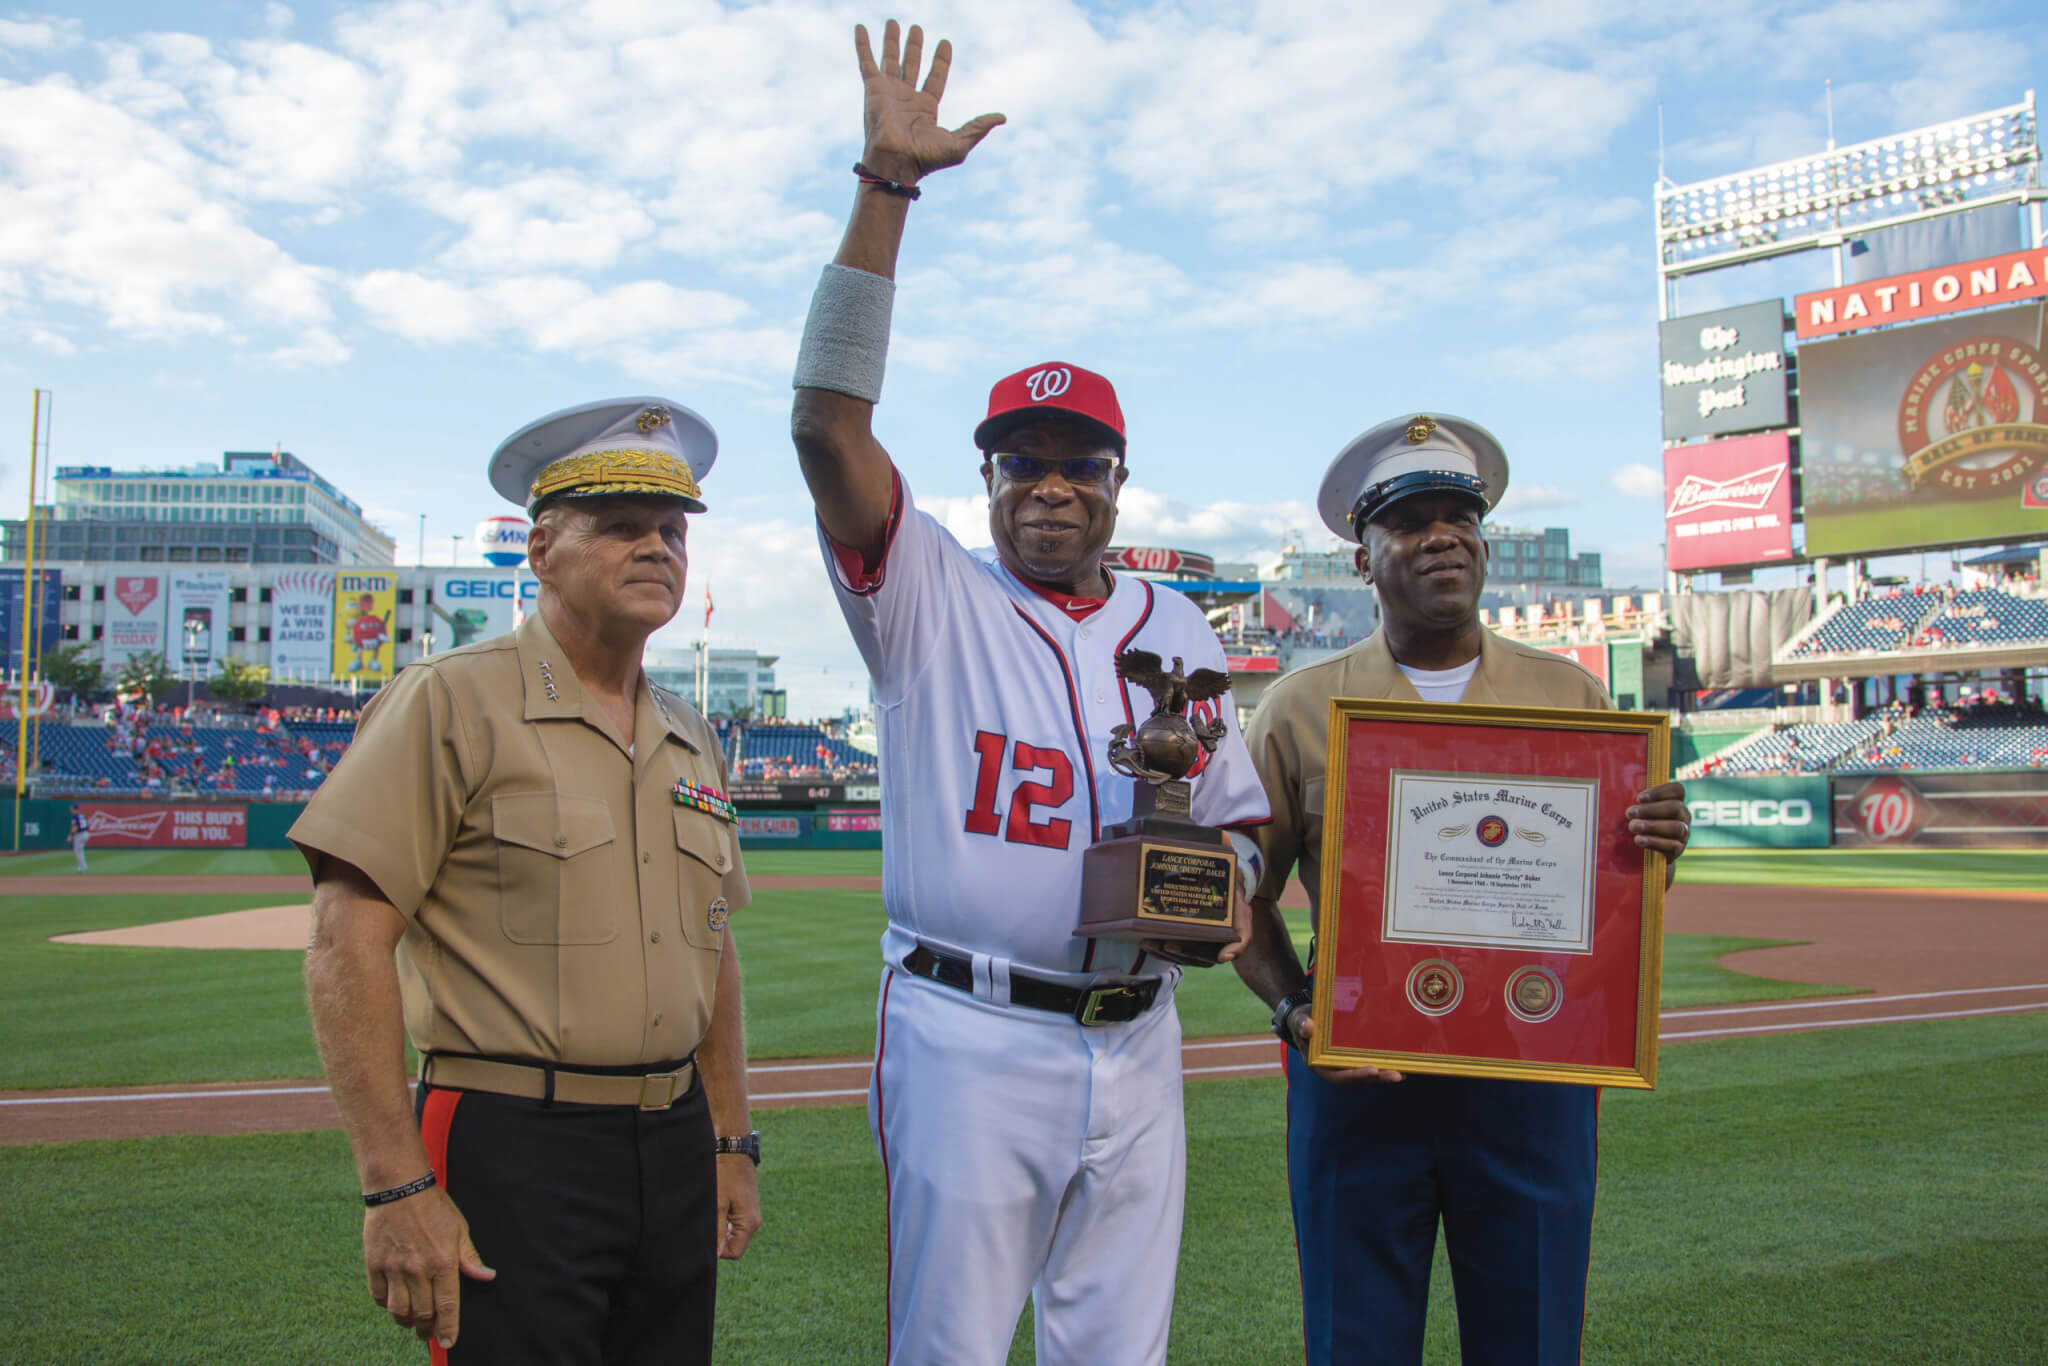 Baseball welcomes Washington Nationals' skipper Dusty Baker back